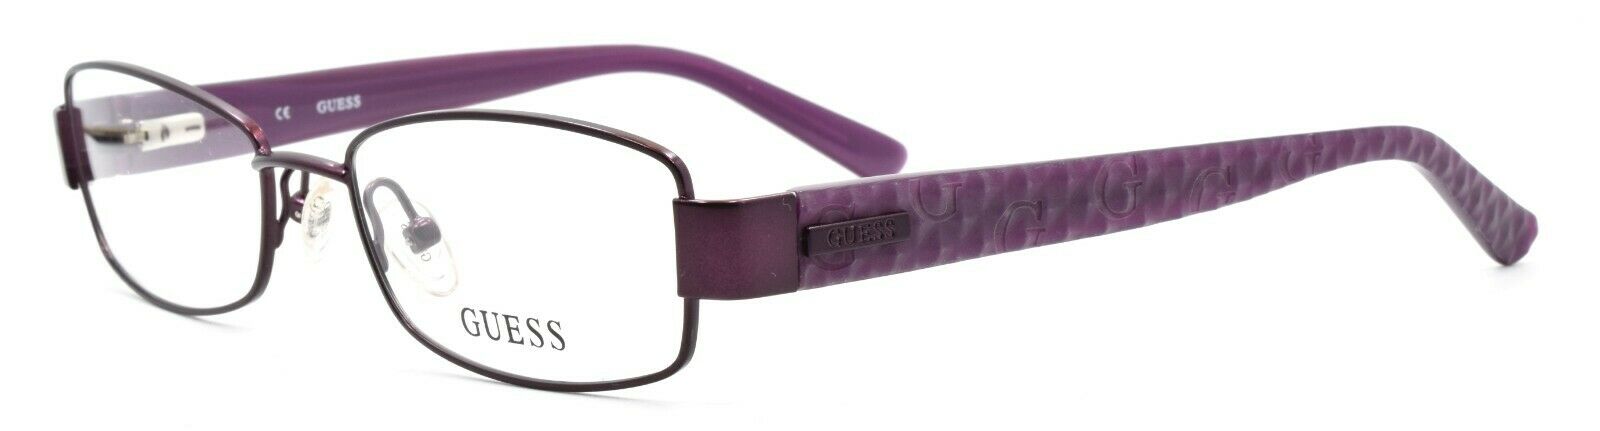 1-GUESS GU2379 PUR Women's Eyeglasses Frames 51-17-135 Purple + CASE-715583773905-IKSpecs